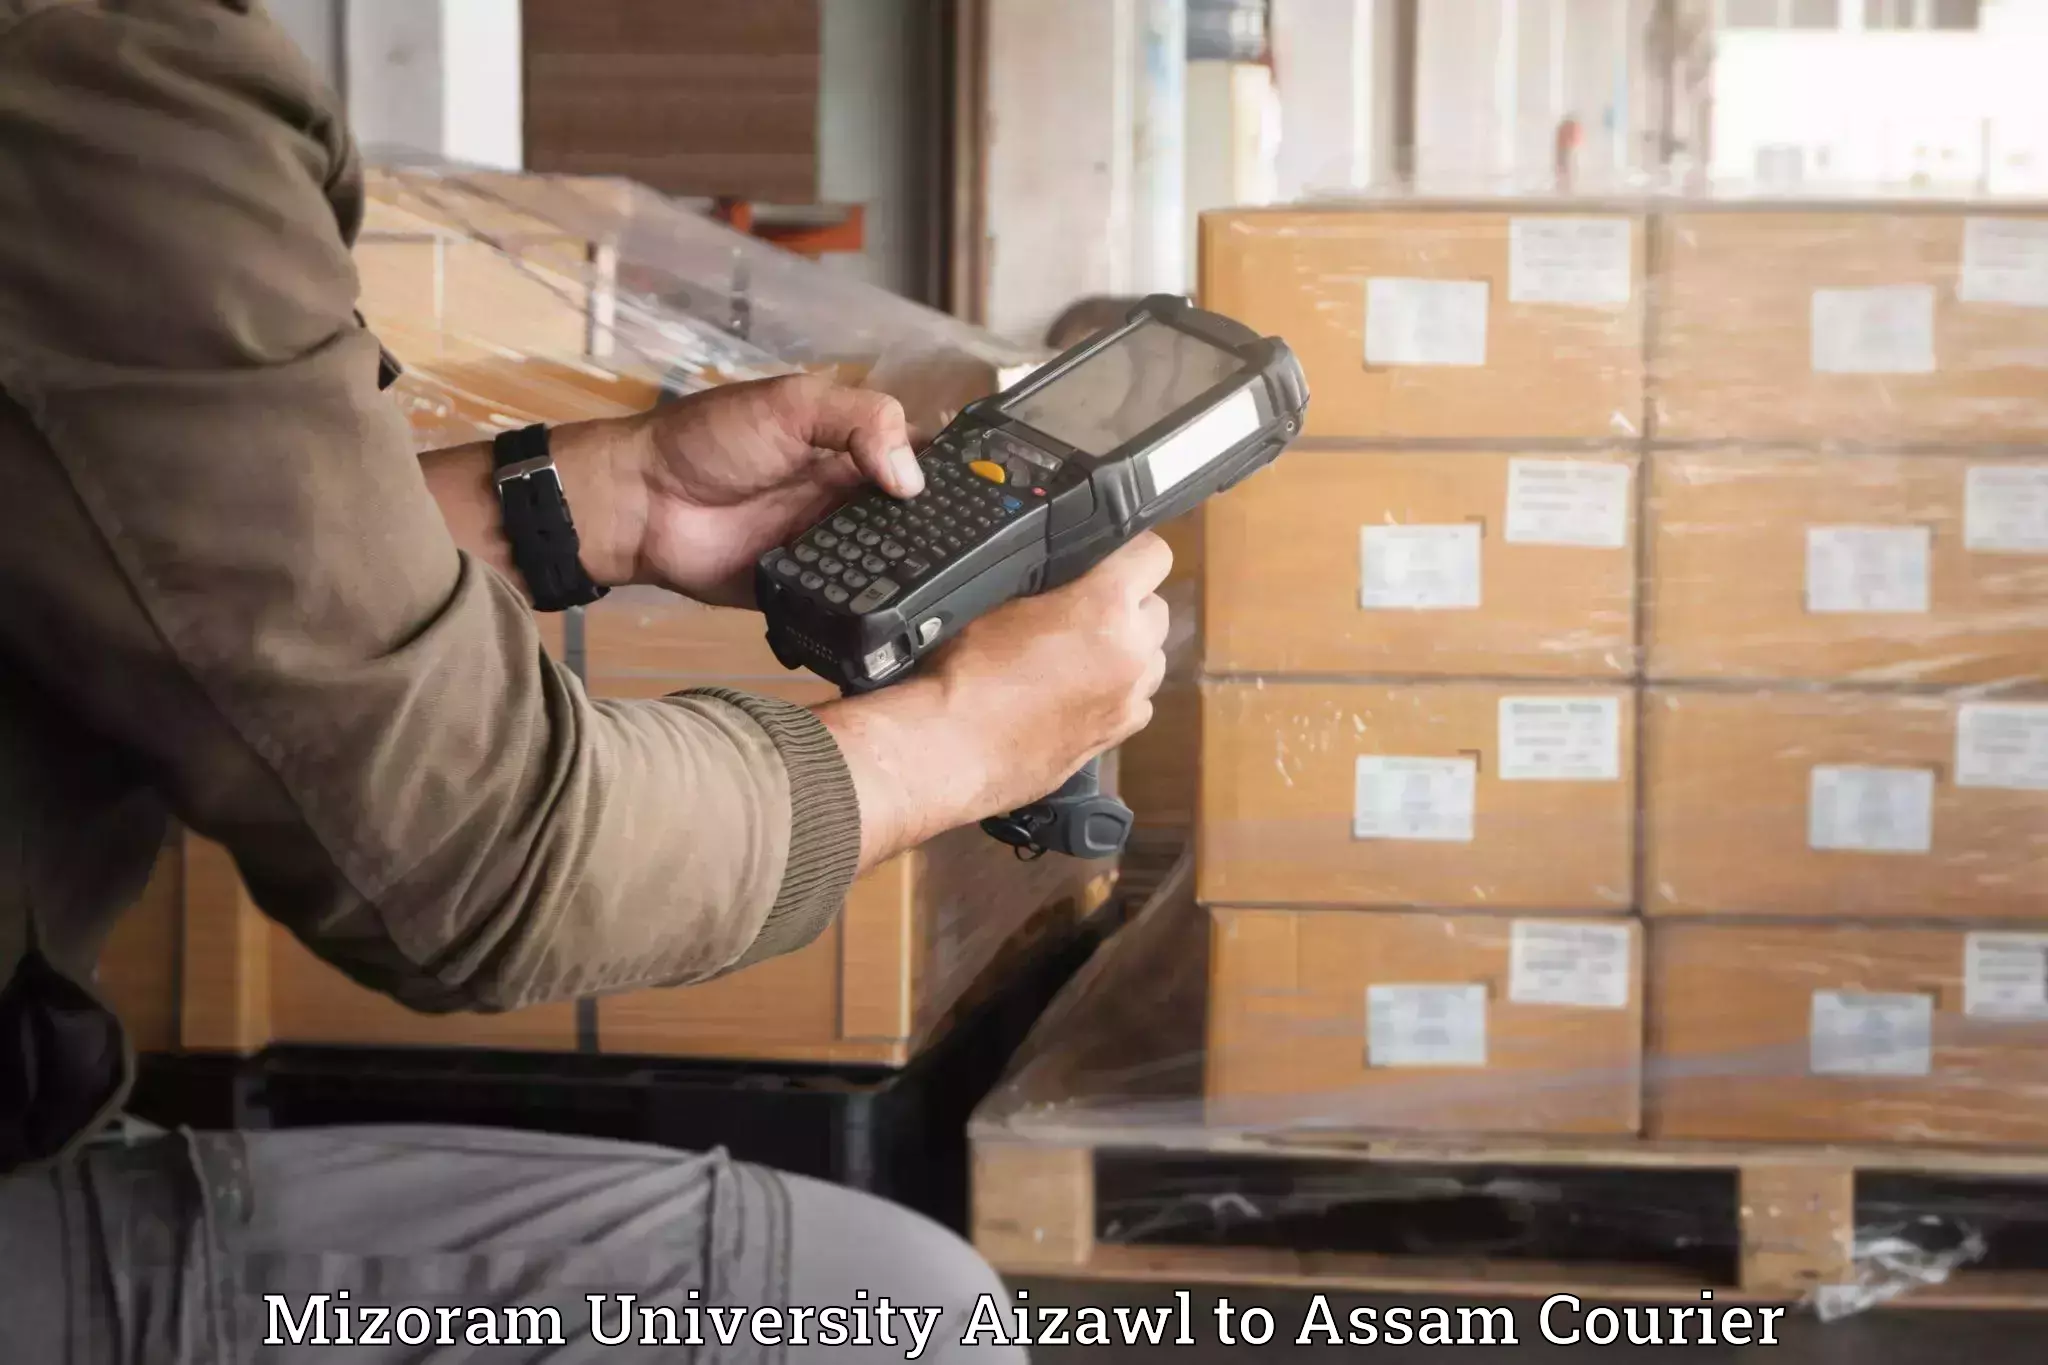 Professional movers and packers Mizoram University Aizawl to Dehurda